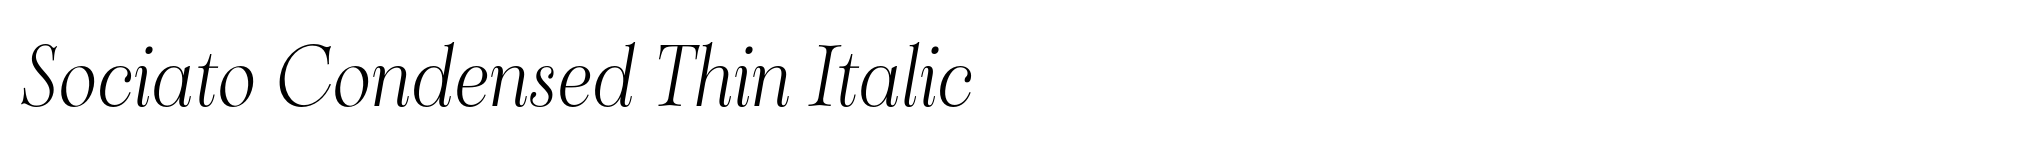 Sociato Condensed Thin Italic image